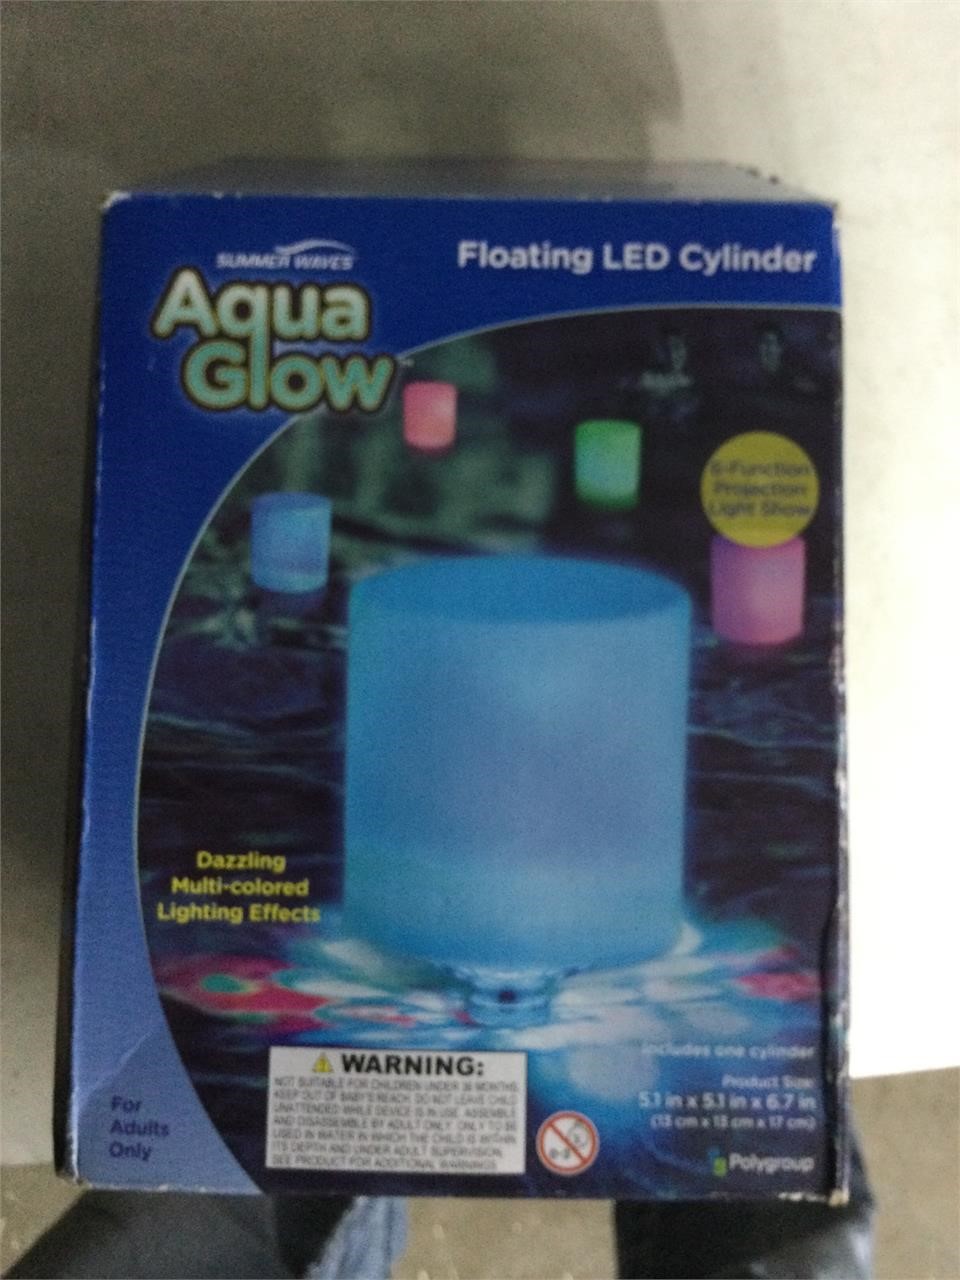 Aqua glow floating LED Cylinder